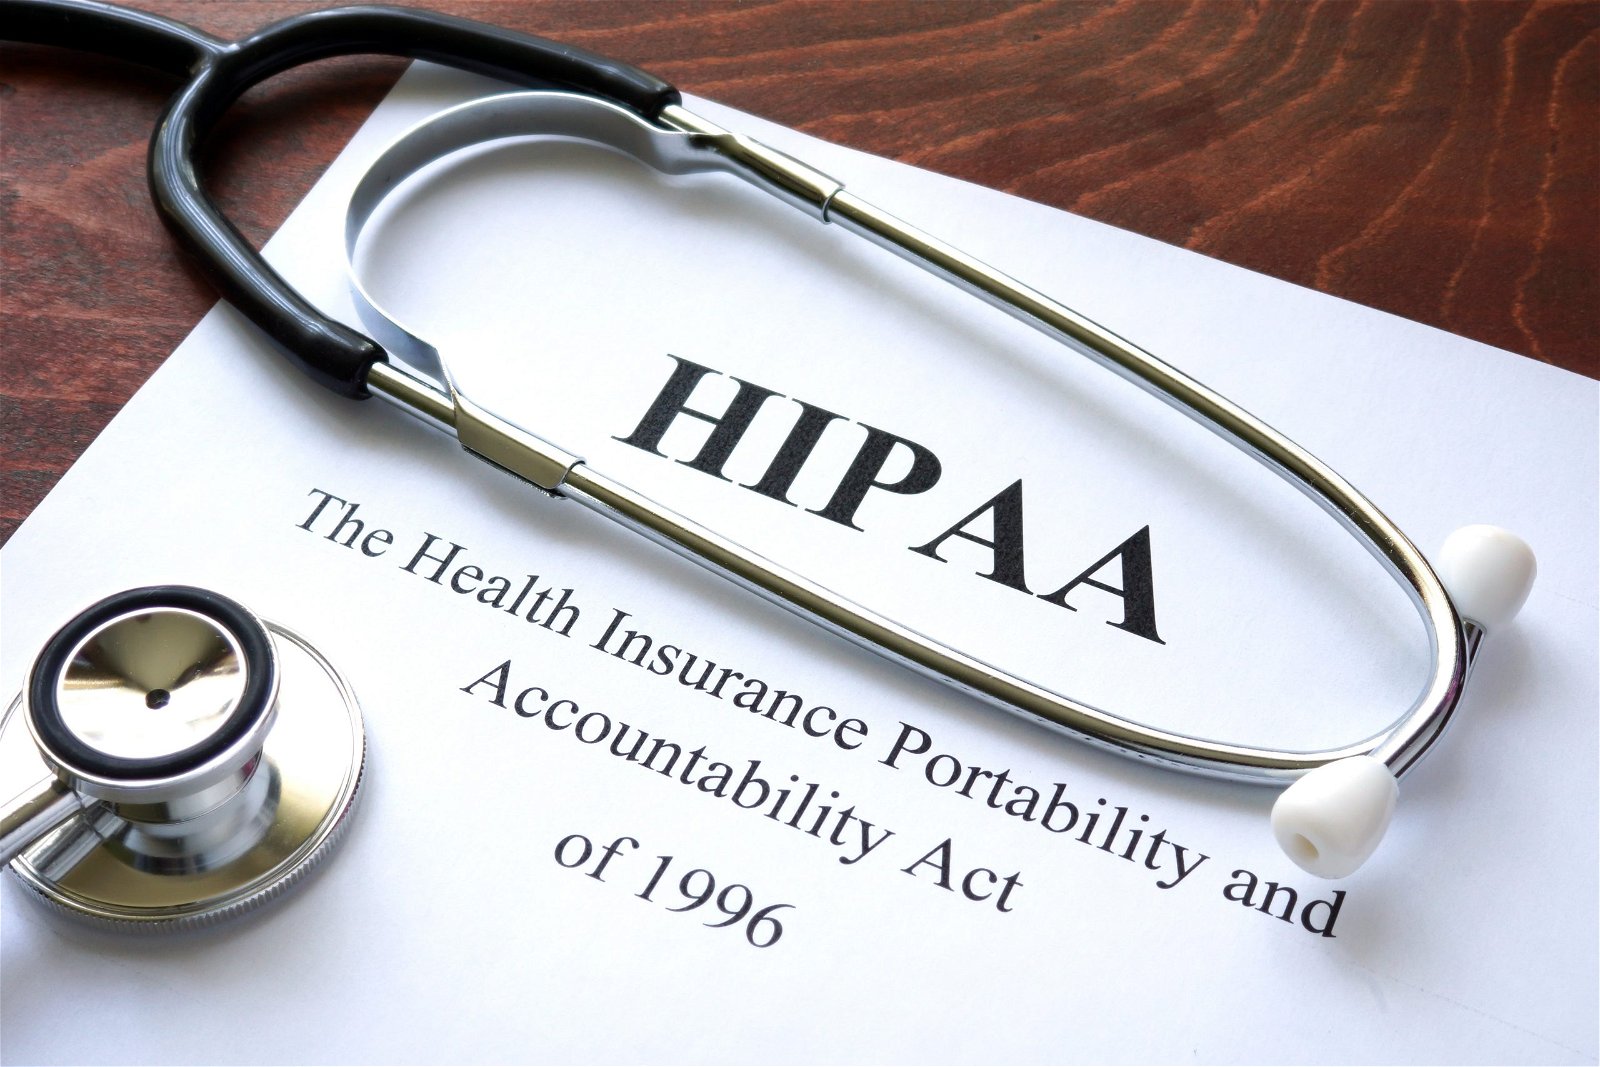 Health Insurance Portability and accountability act HIPAA and stethoscope.